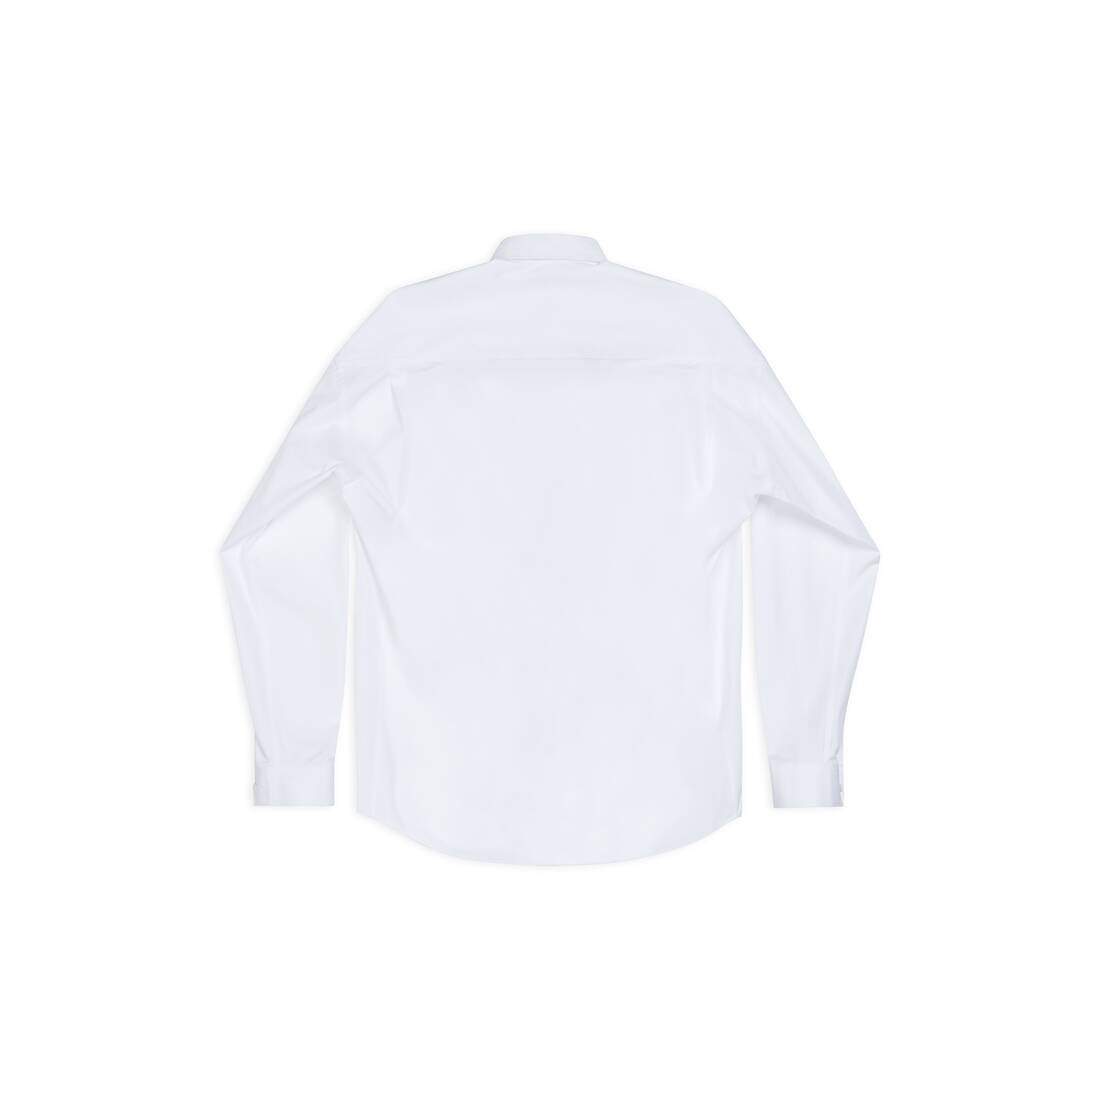 Men's Cocoon Shirt in White - 2